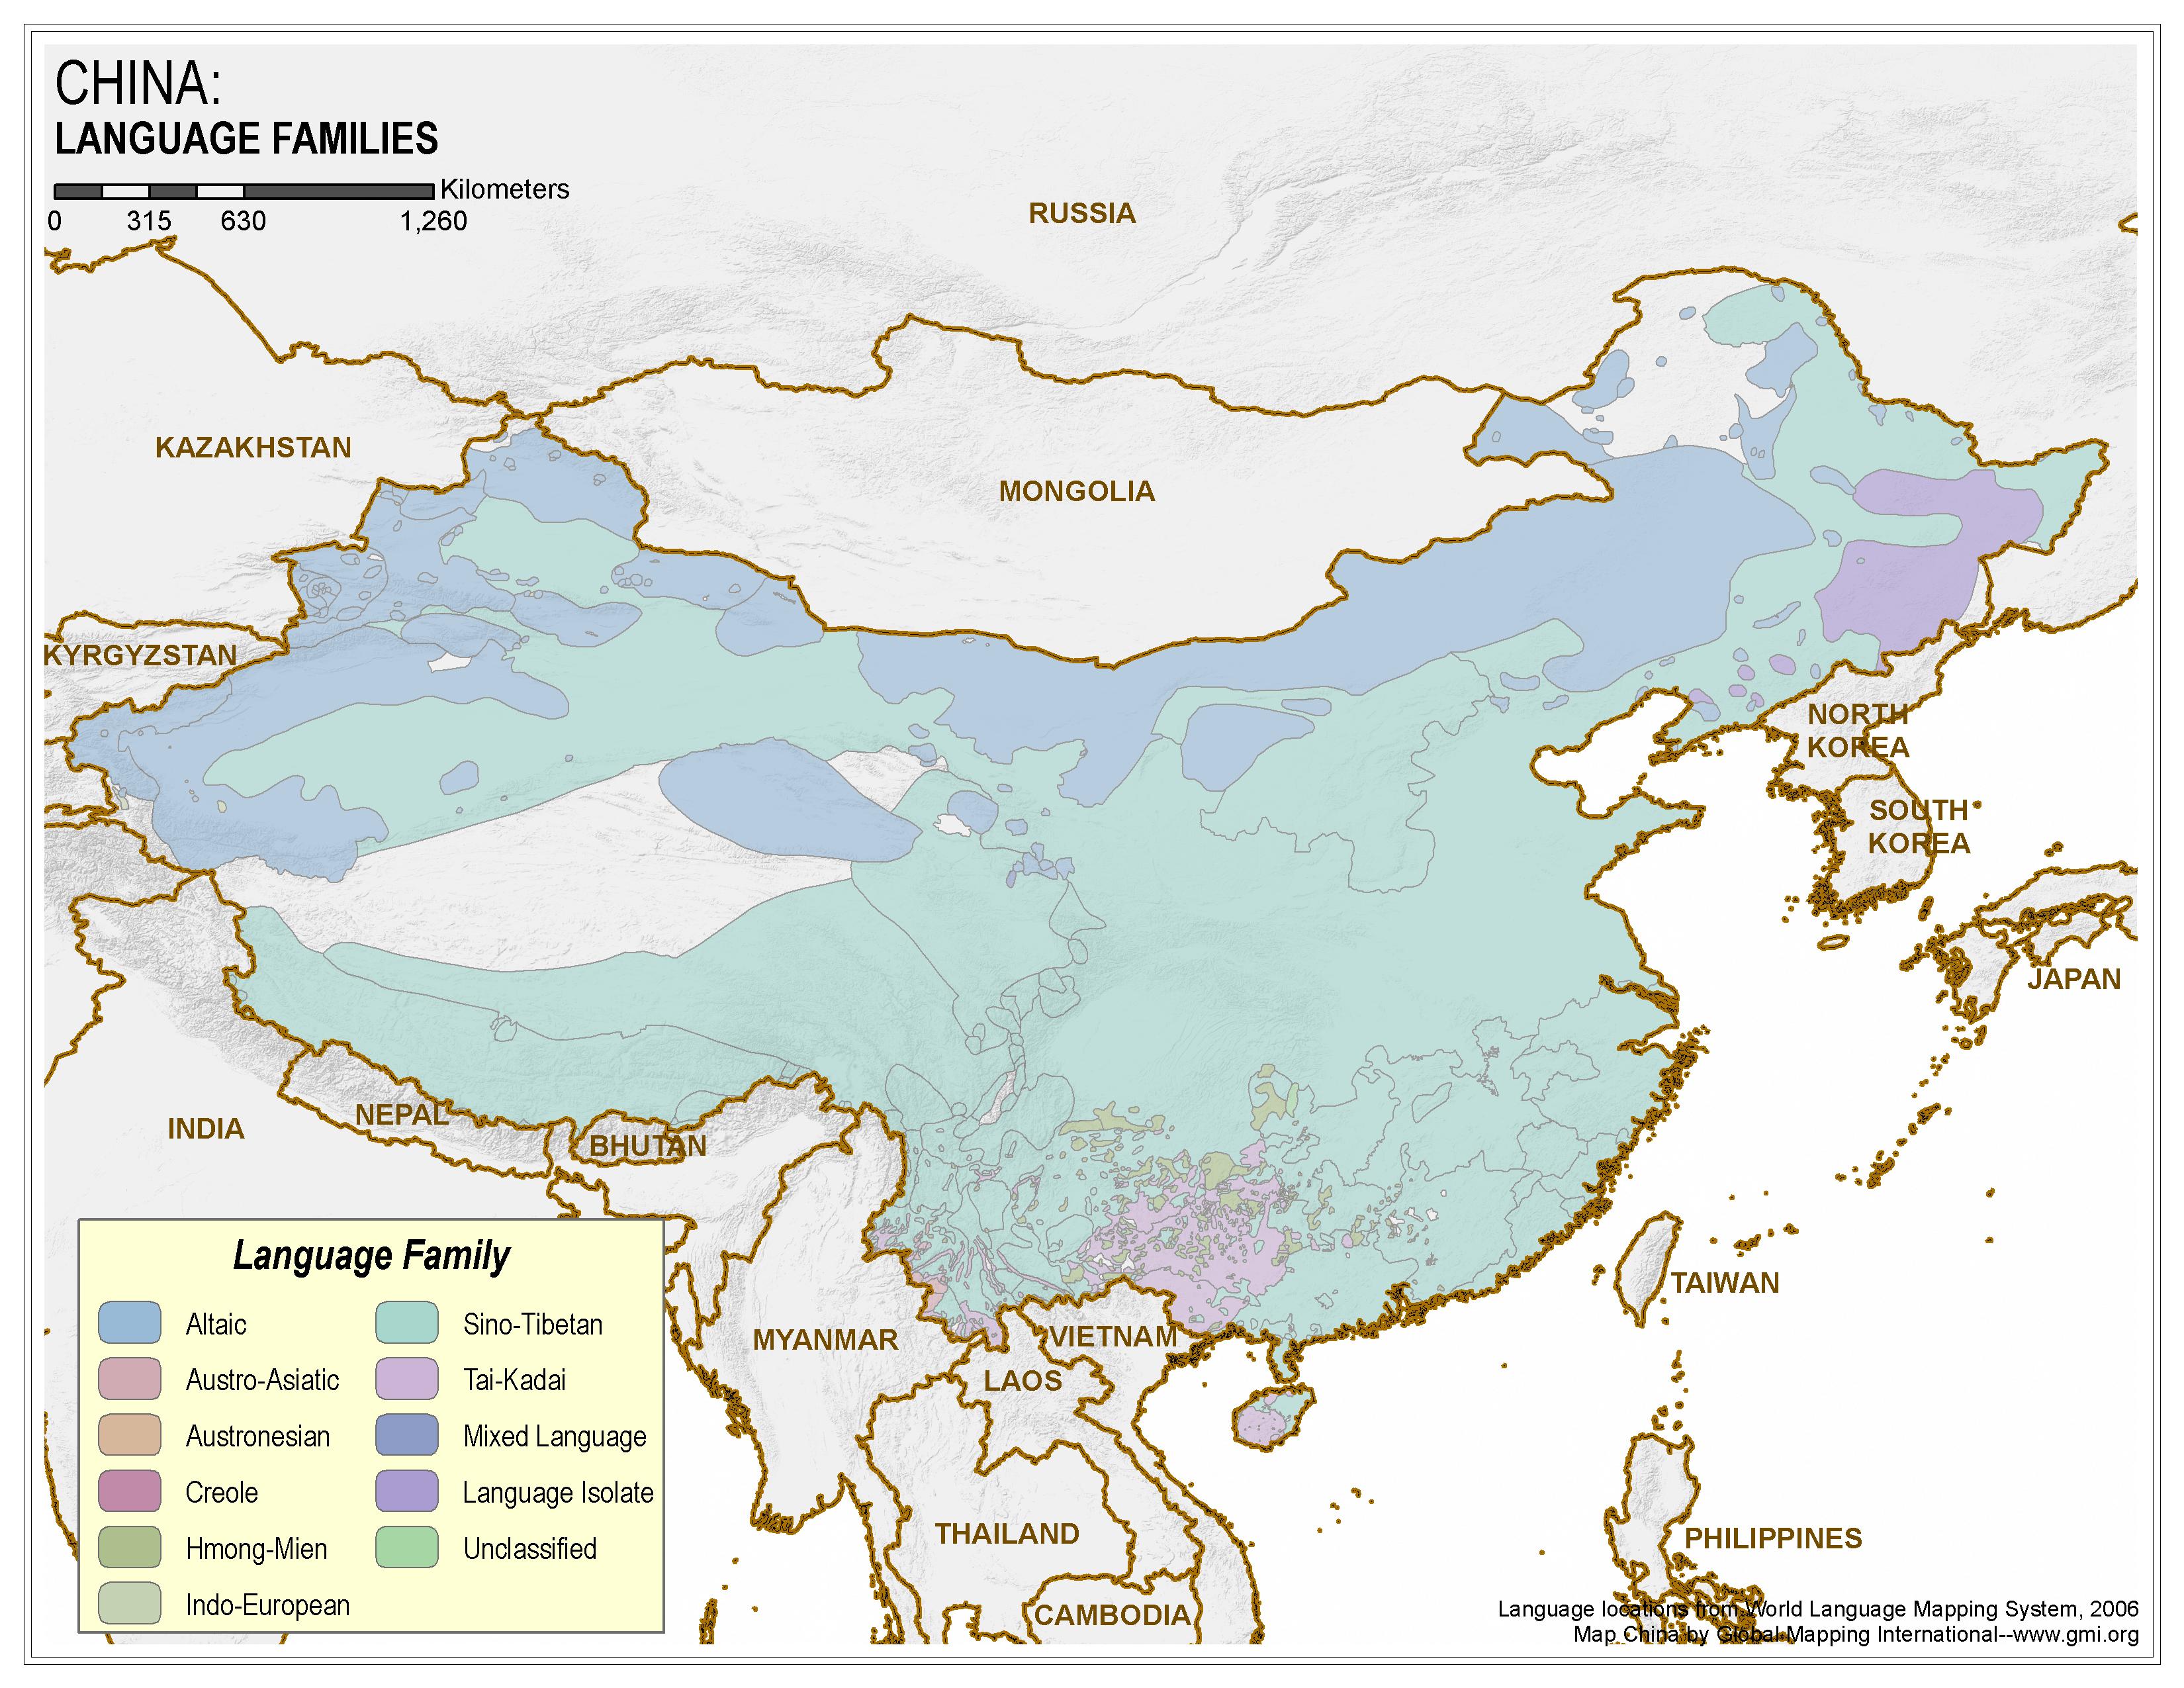 China: Language Families